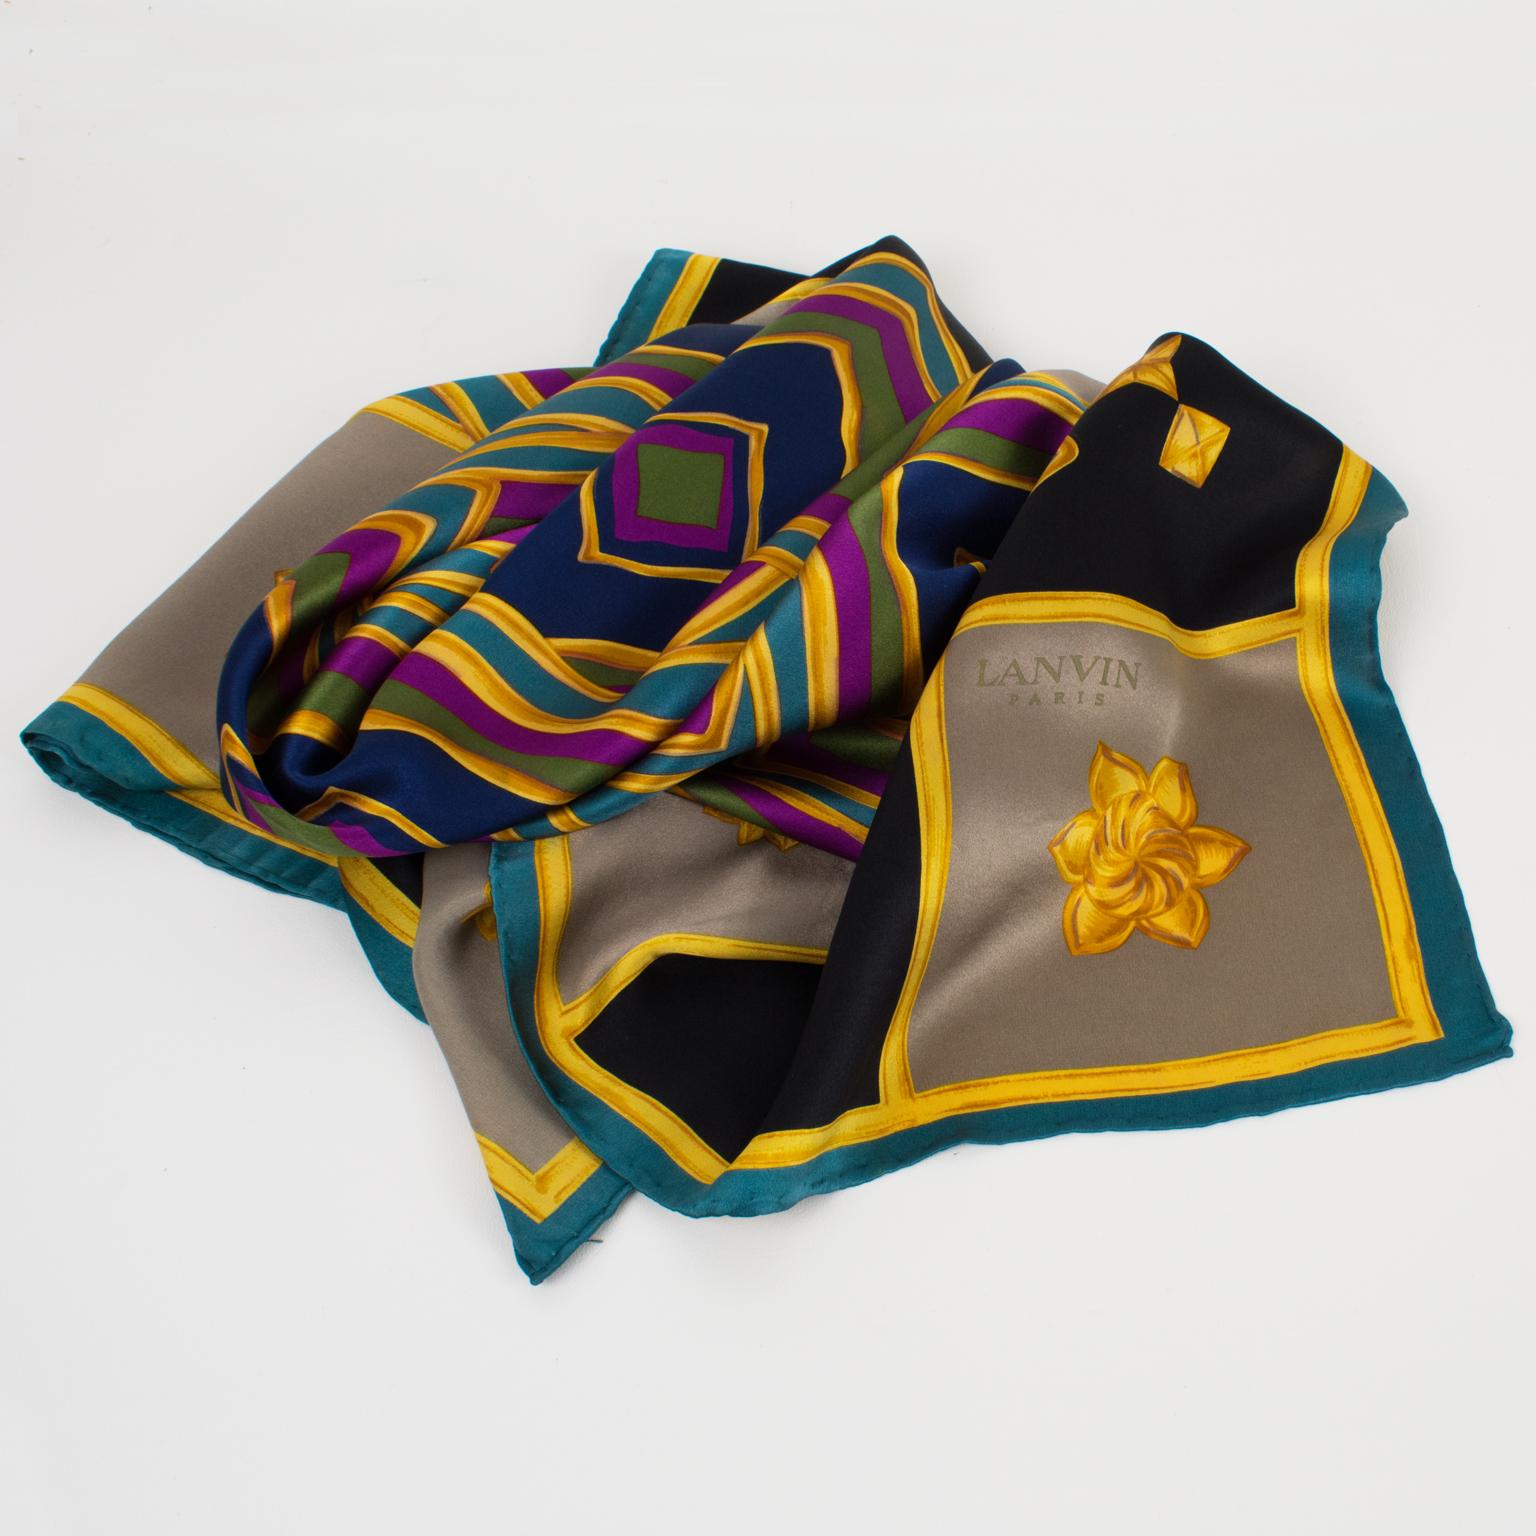 Lanvin Paris Silk Scarf Multicolor Geometric Print In Good Condition For Sale In Atlanta, GA